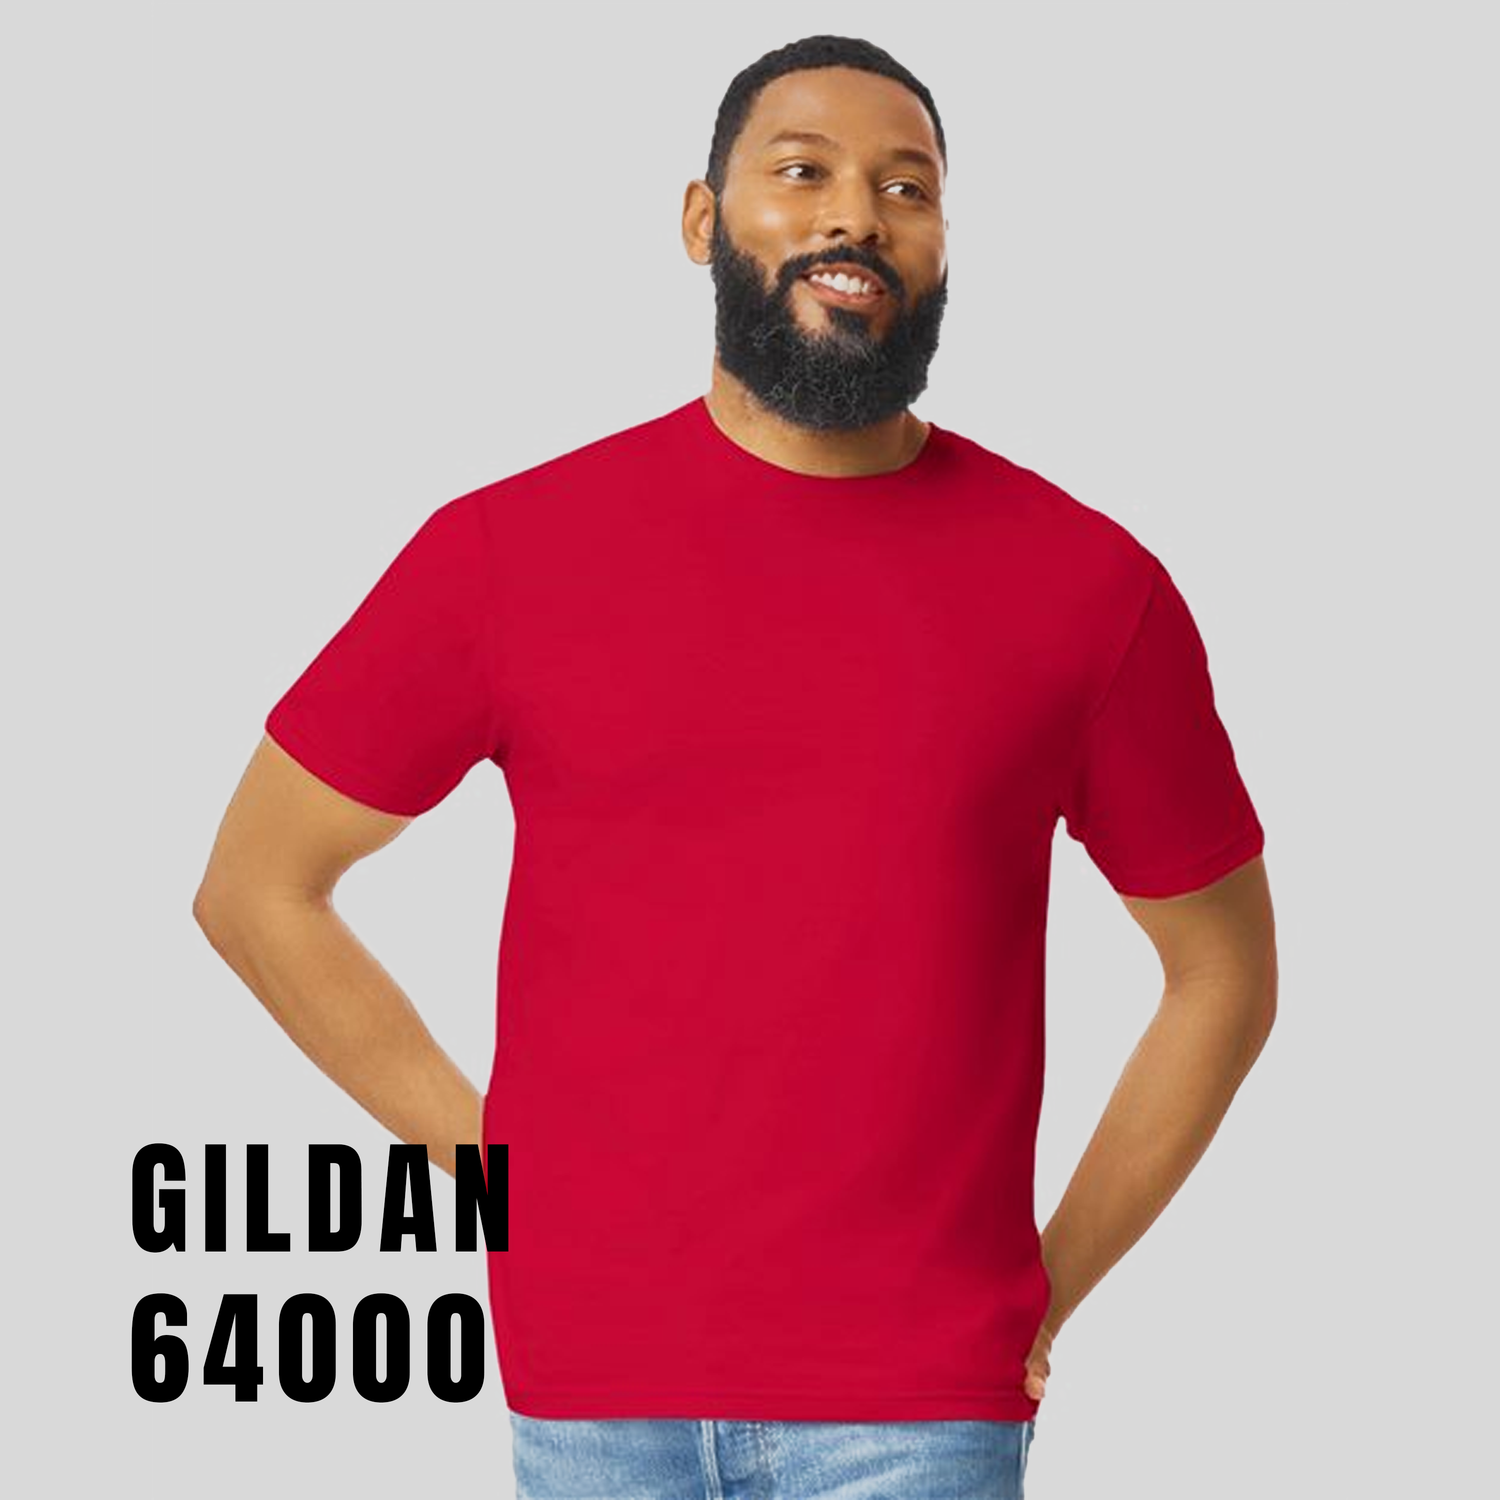 Gildan 64000 Sample